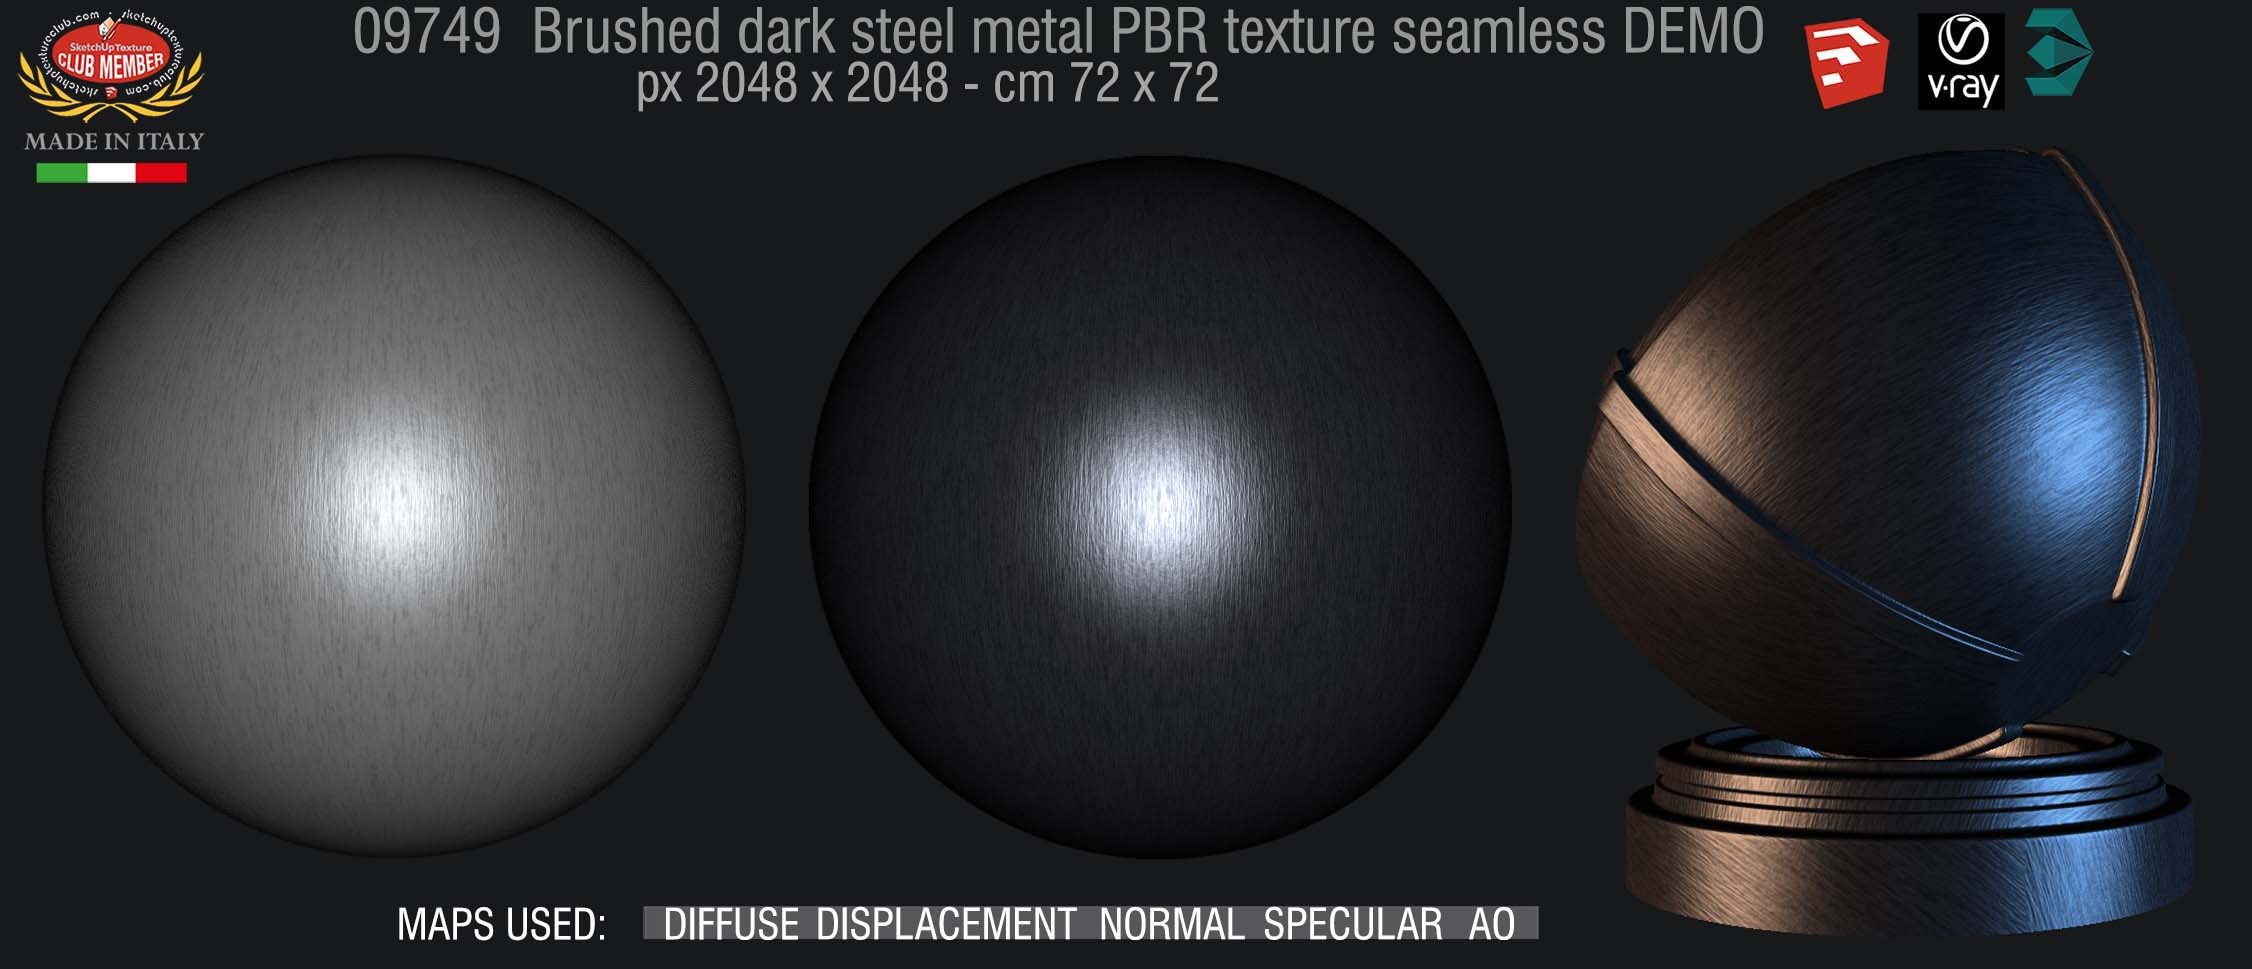 09749 Brushed dark steel metal PBR texture seamless DEMO